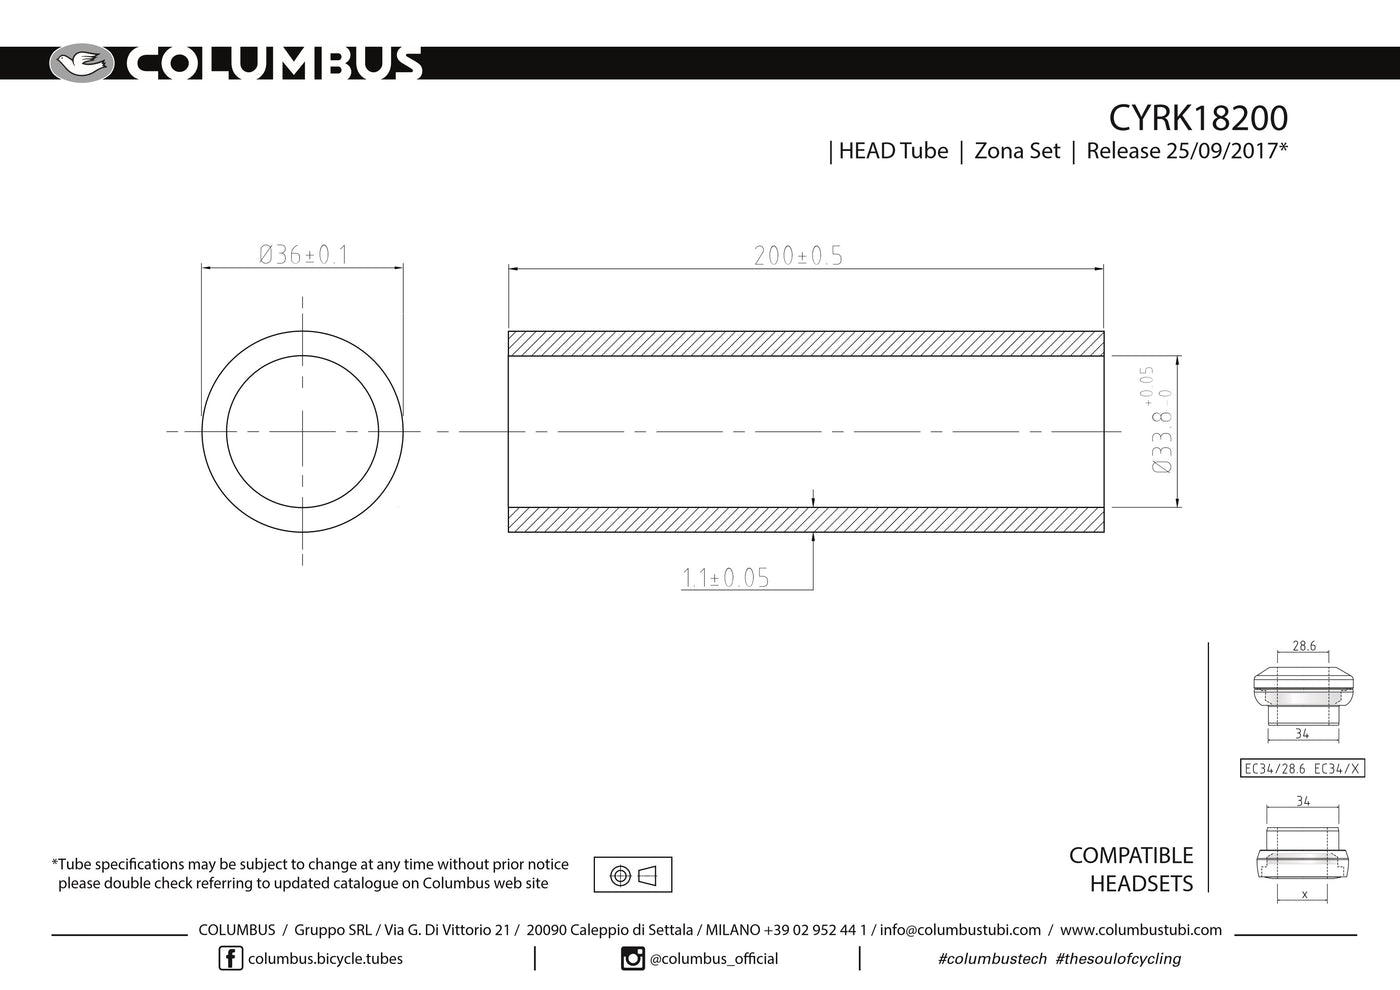 CYRK18200 - Columbus Tubing Zona headtube - 36 dia. - 1.1mm wall - length = 200